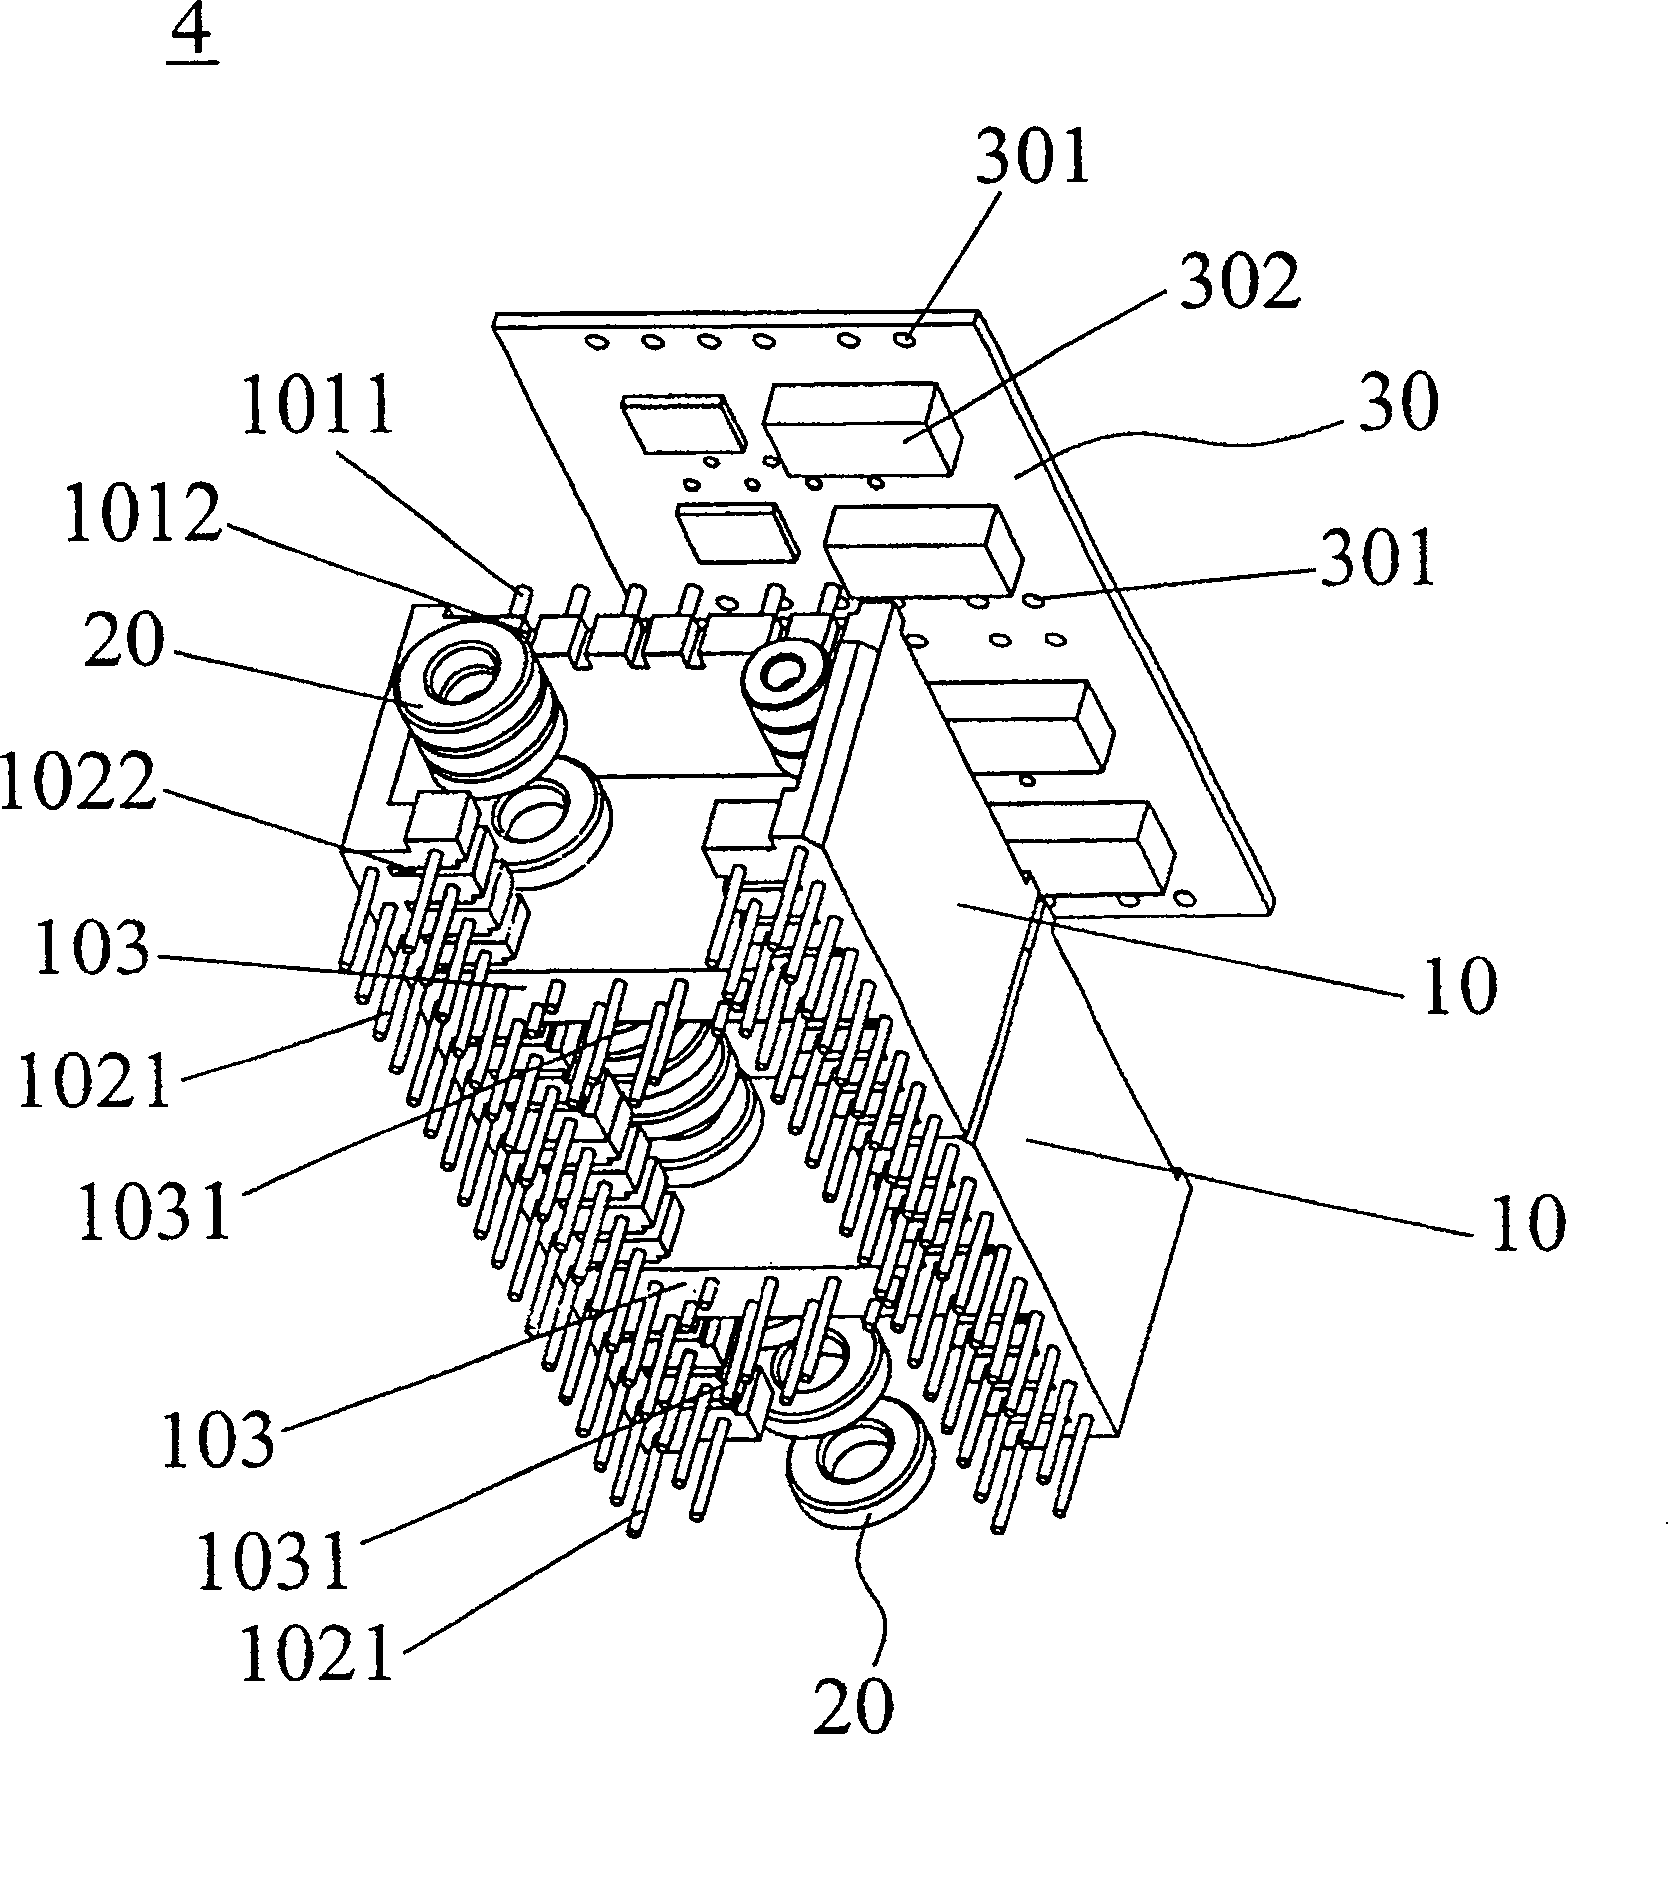 Filter and its coil arrangement frame